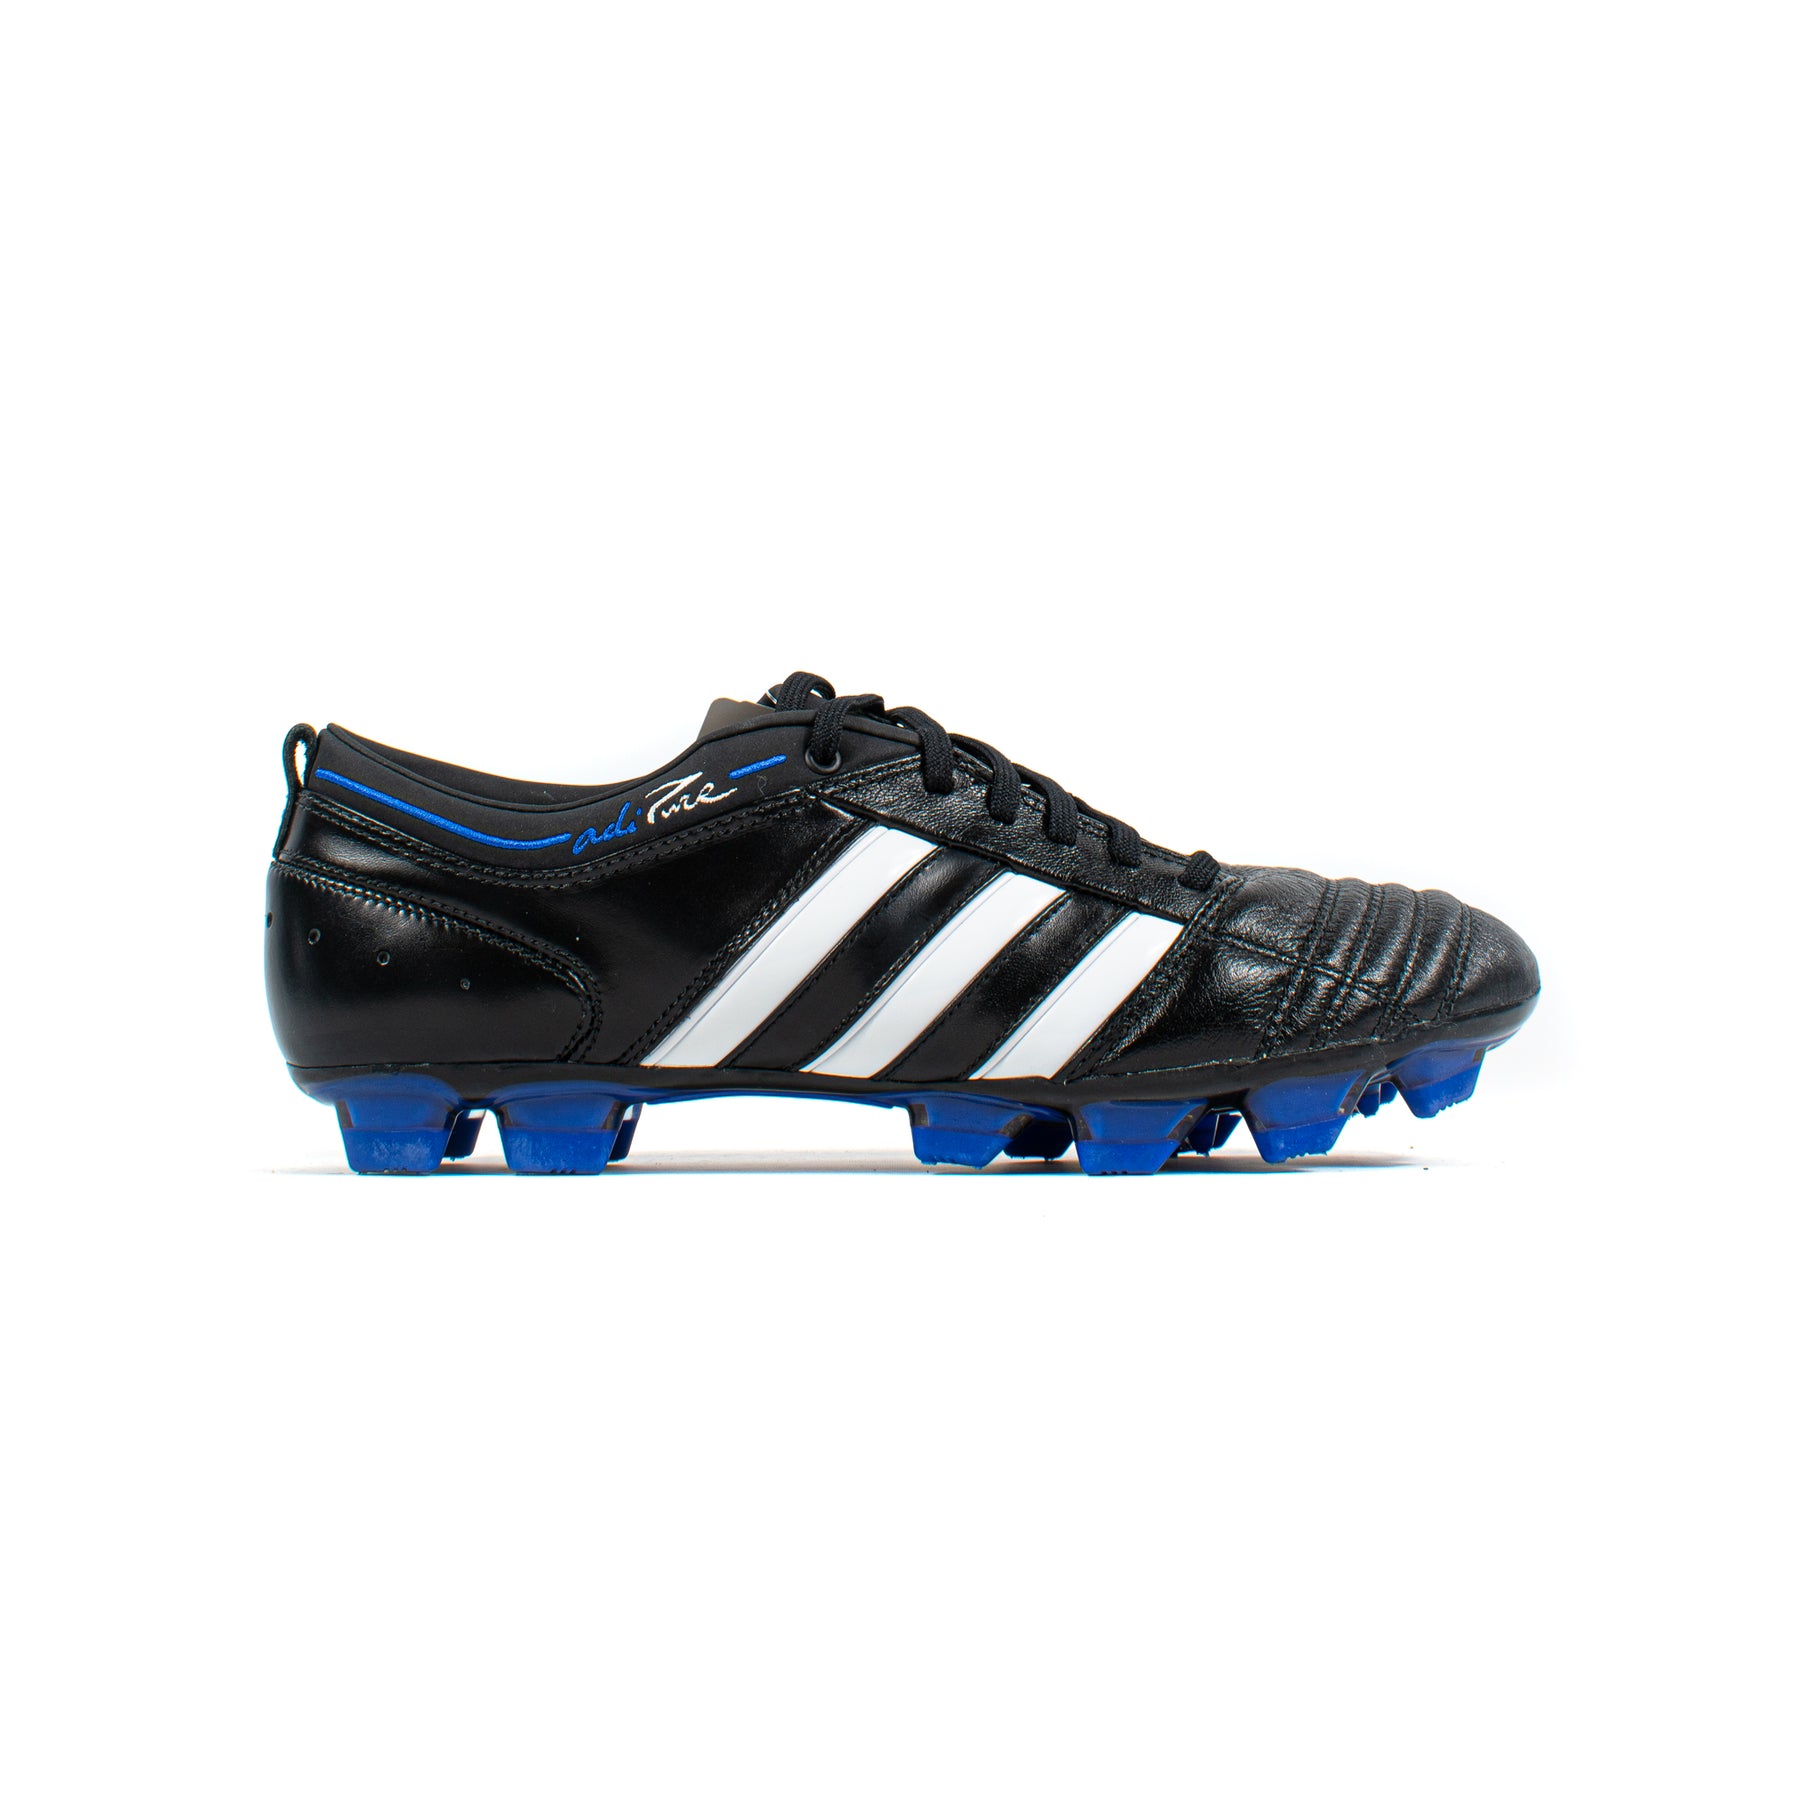 Adidas II FG – Classic Soccer Cleats